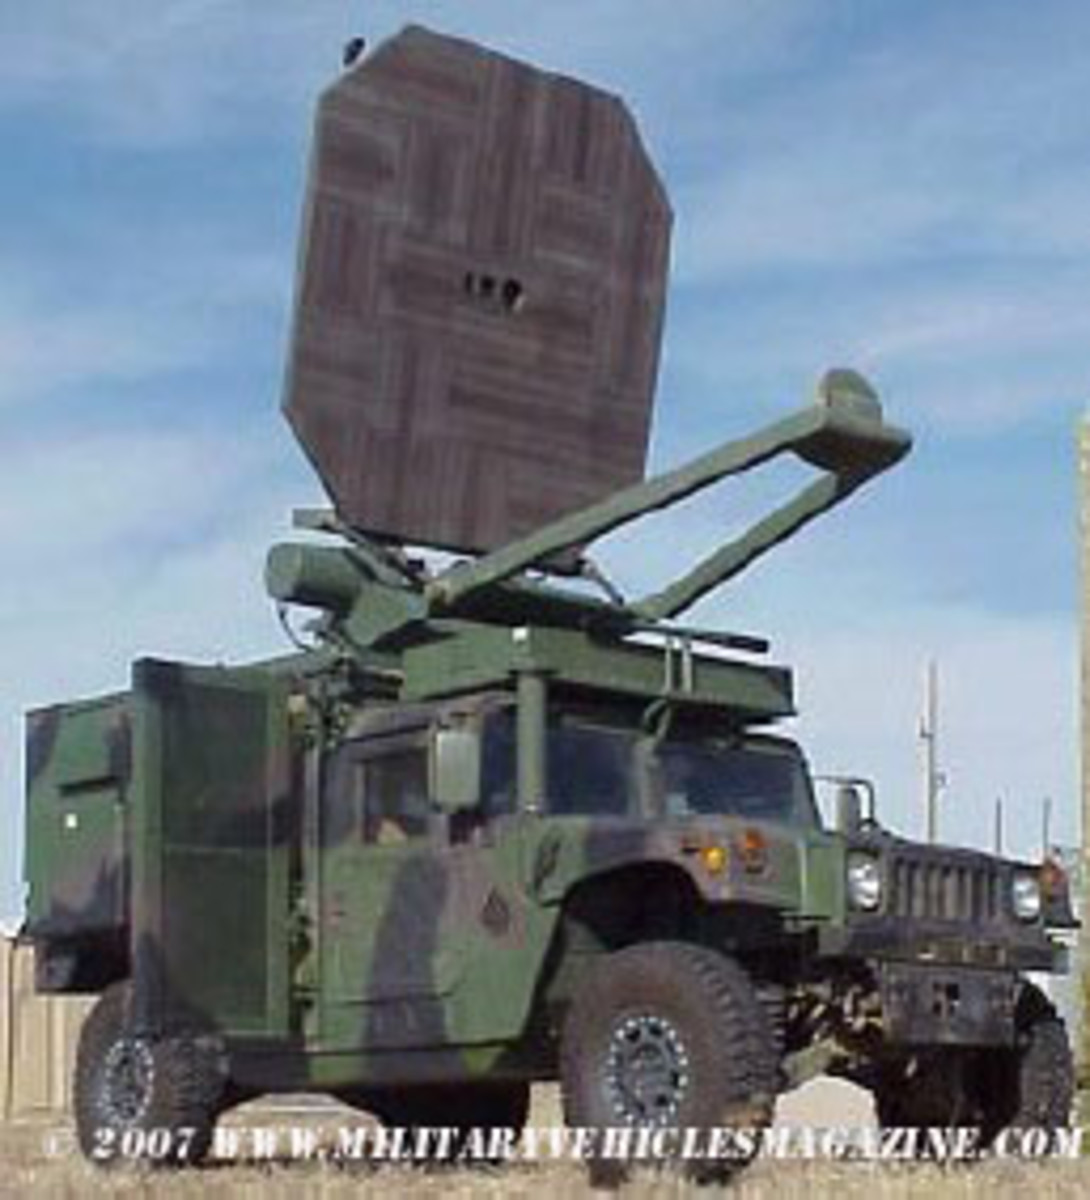 Humvee with ADS mounted.